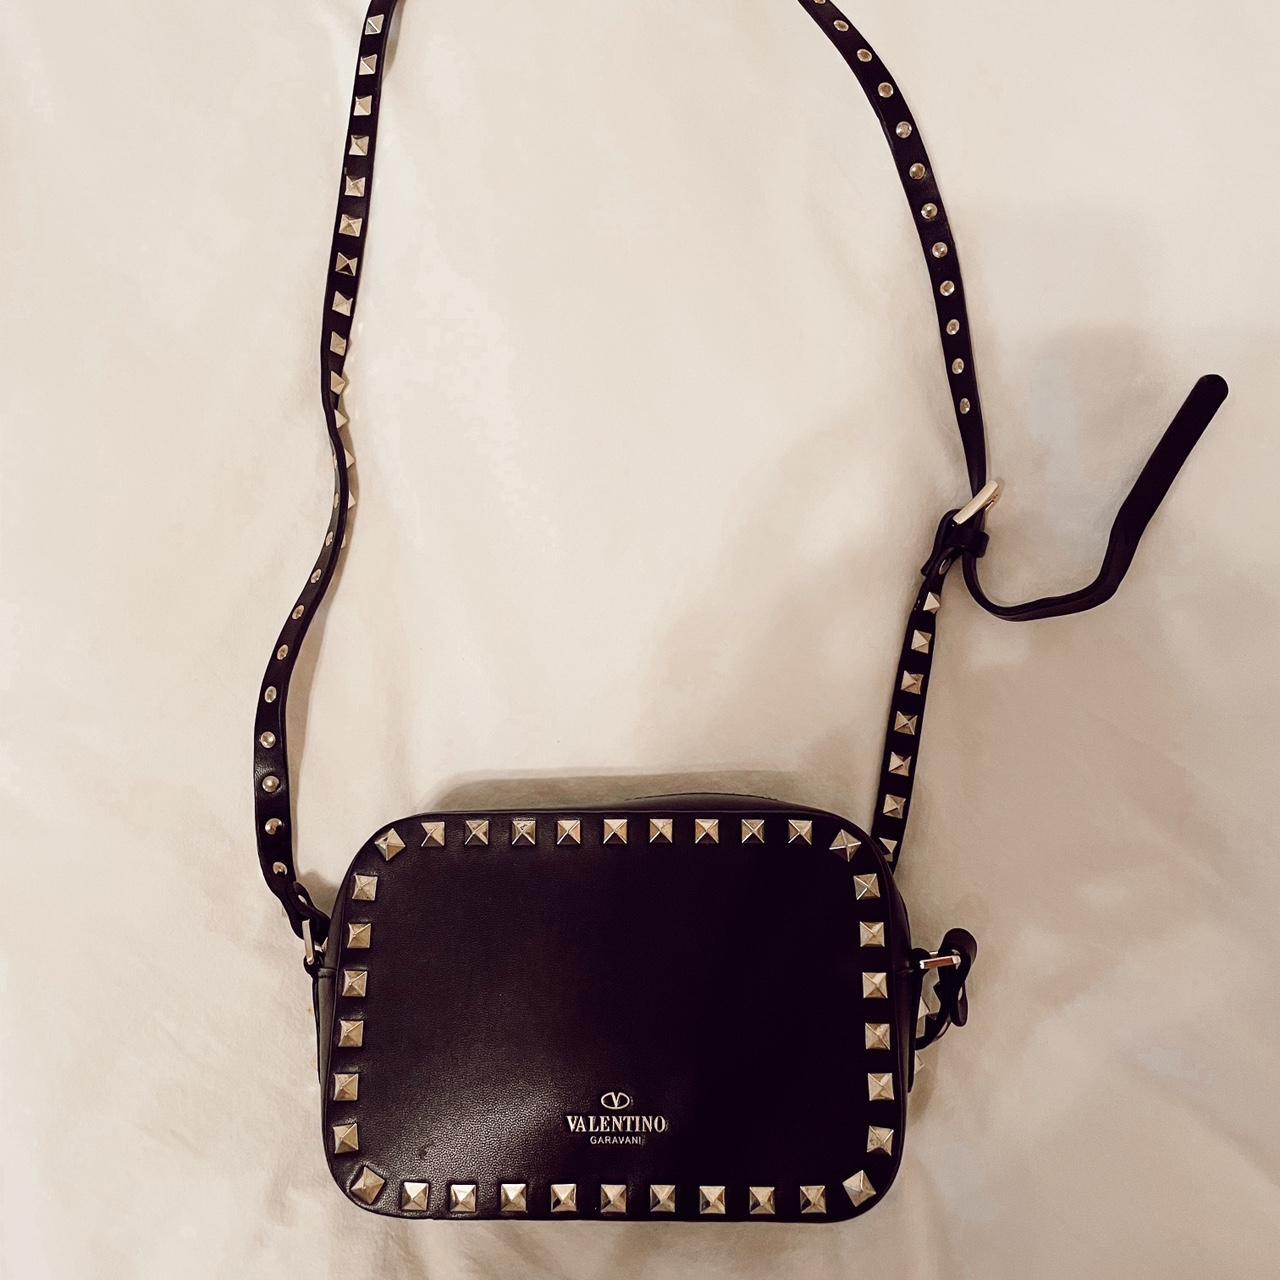 Valentino Women's Black Bag